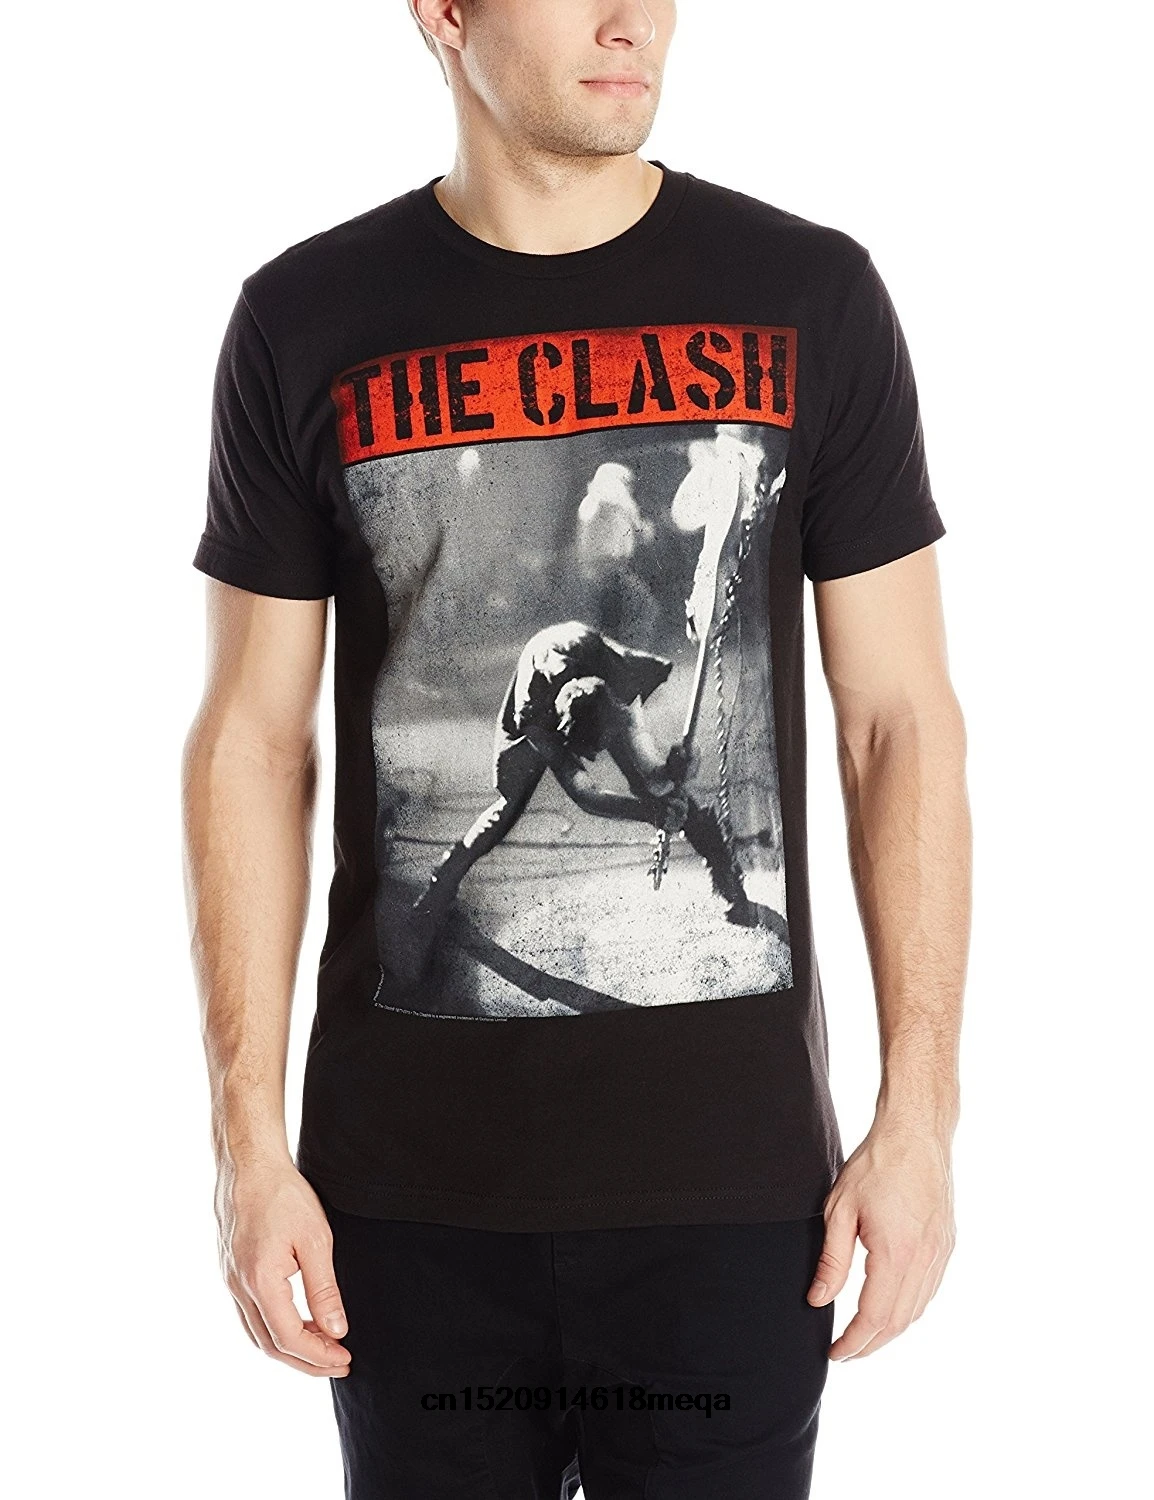 Camiseta de para hombre, barata hombre, Camiseta con estampado de la guitarra de choque contra golpes, camiseta - AliExpress